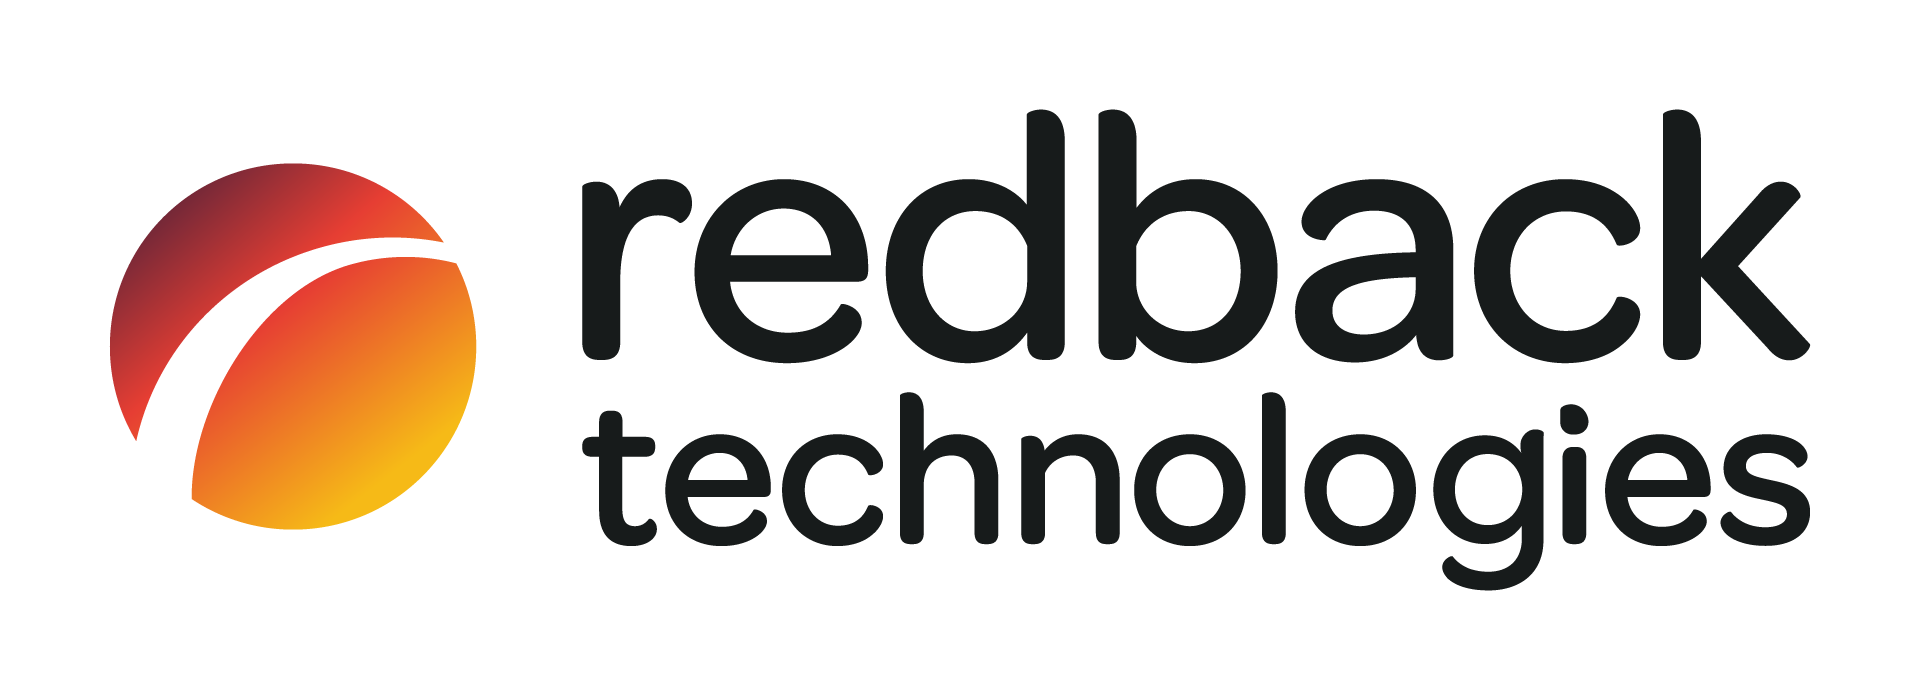 Redback-Technologies-Horizontal-Full-Gradient-RGB_1.png